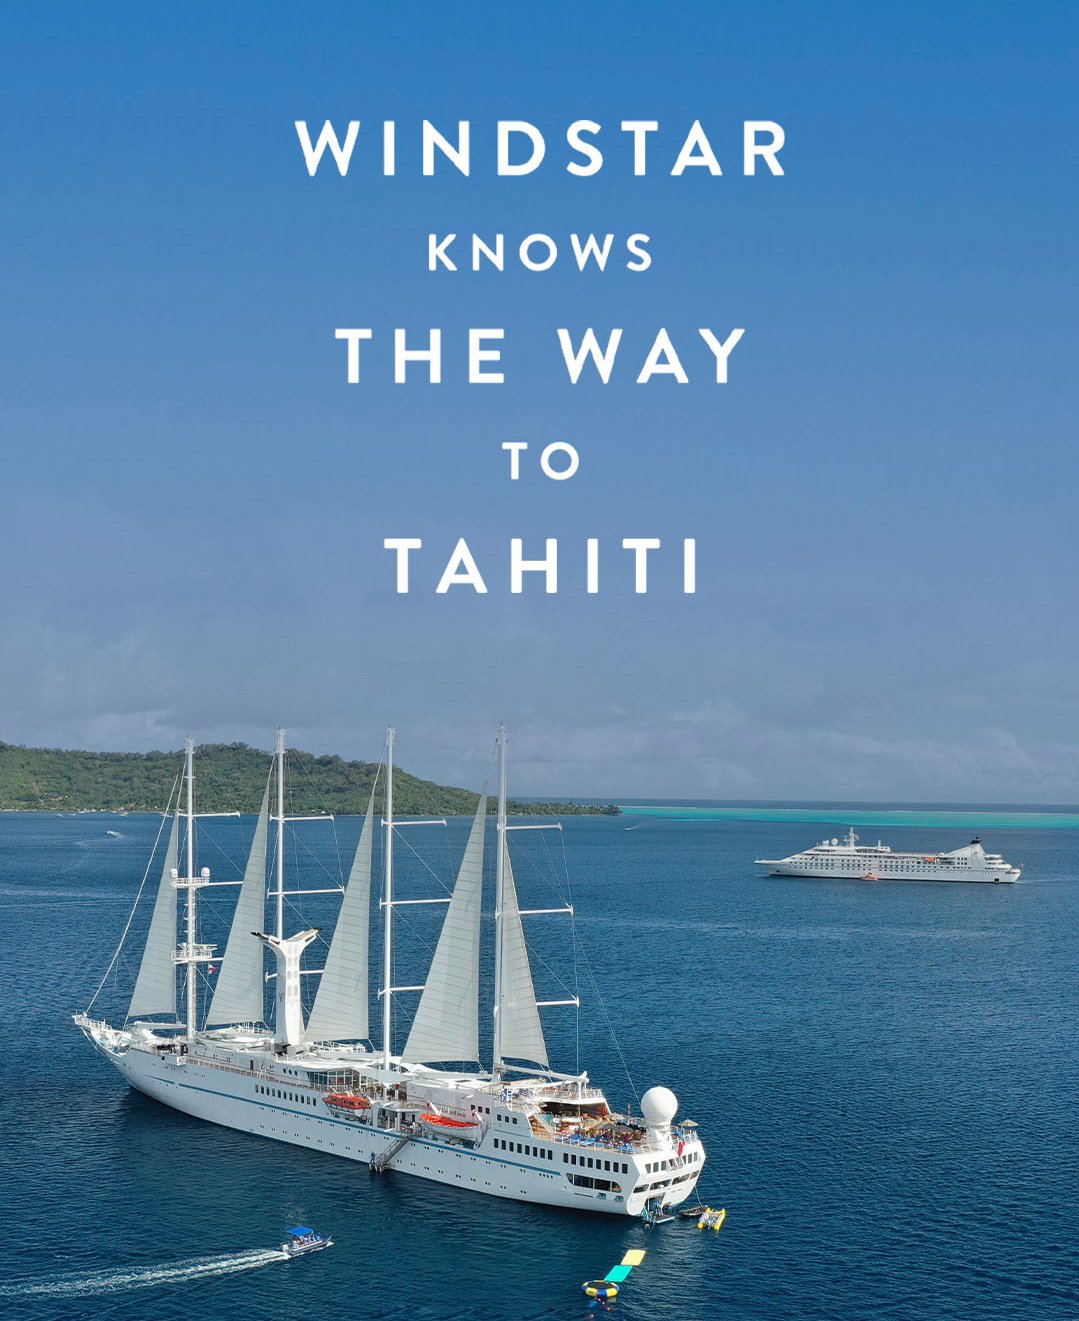 Windstar knows the way to Tahiti